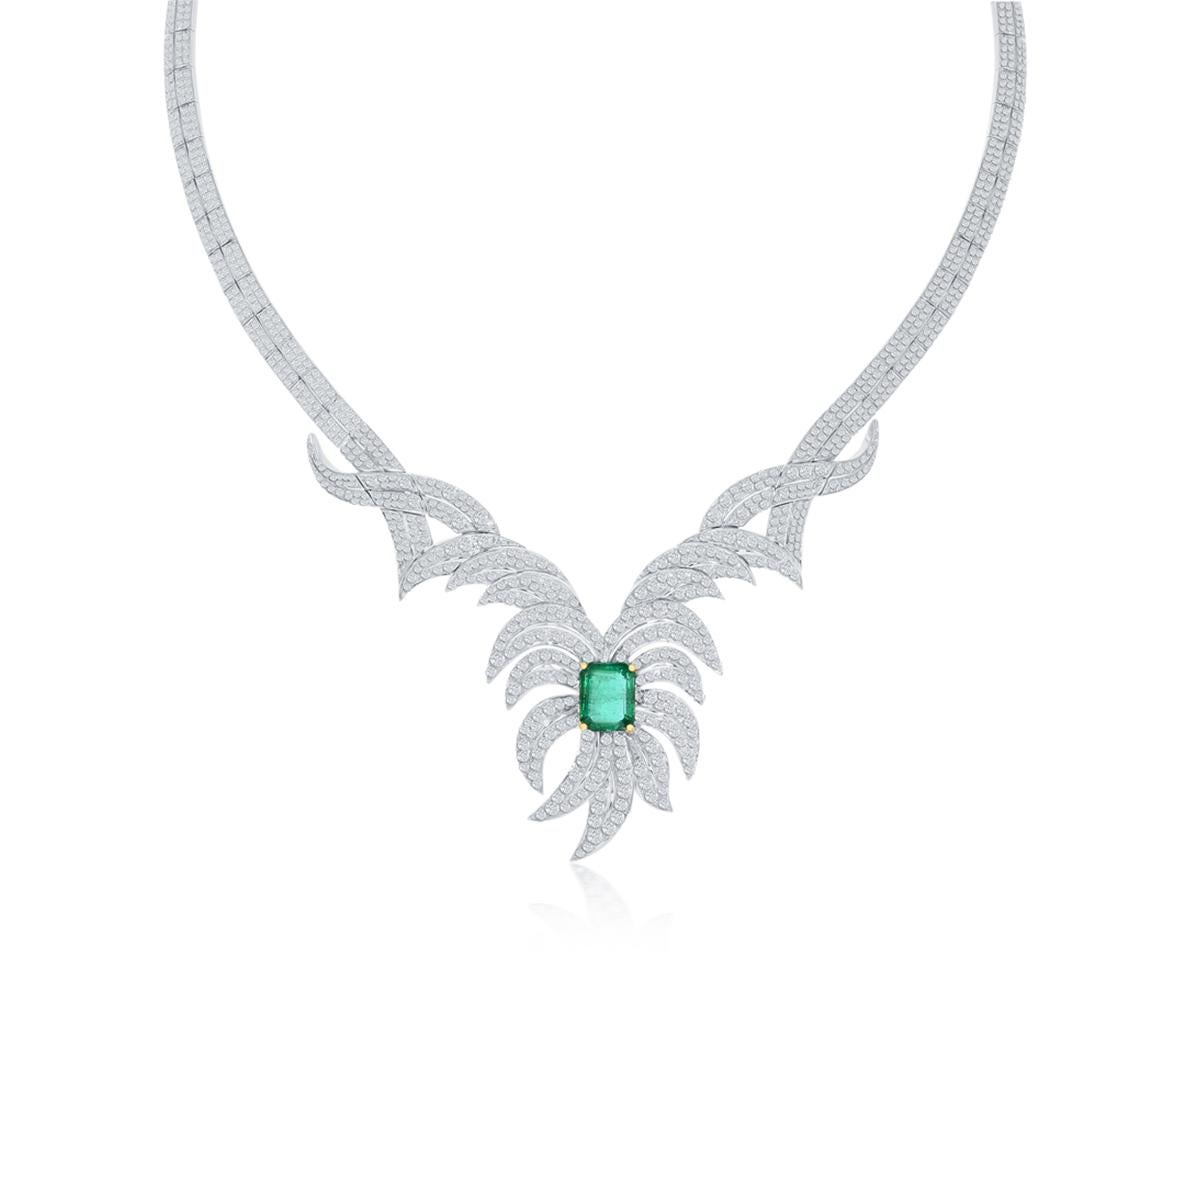 EMERALD AND DIAMOND NECKLACE
Beautiful lace-like diamond detail enhances a rich green octagonal emerald.
Item:	# 03022
Setting:	18K W
Lab:	C.Dunaigre
Color Weight:	5.13 ct. of Emerald
Diamond Weight:	15.35 ct. of Diamonds
